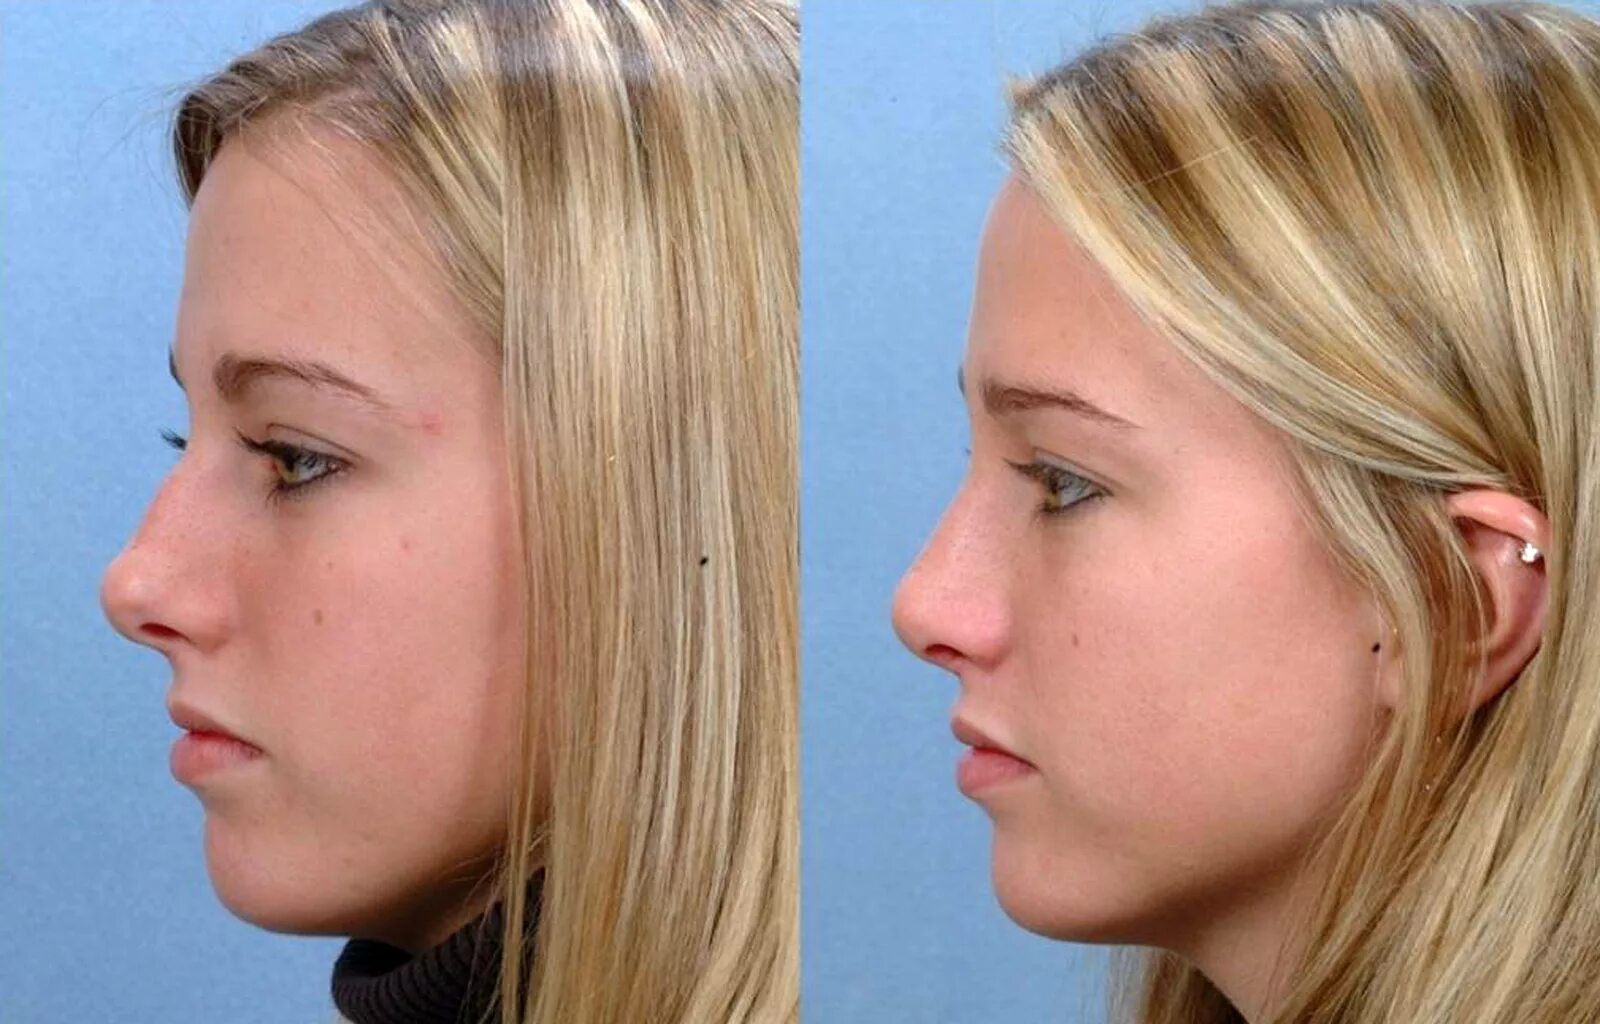 Ринопластика Эленшлегер. Пластика носа. Ринопластика носа. Пластическая операция на нос до и после. Фото ринопластики до и после нос